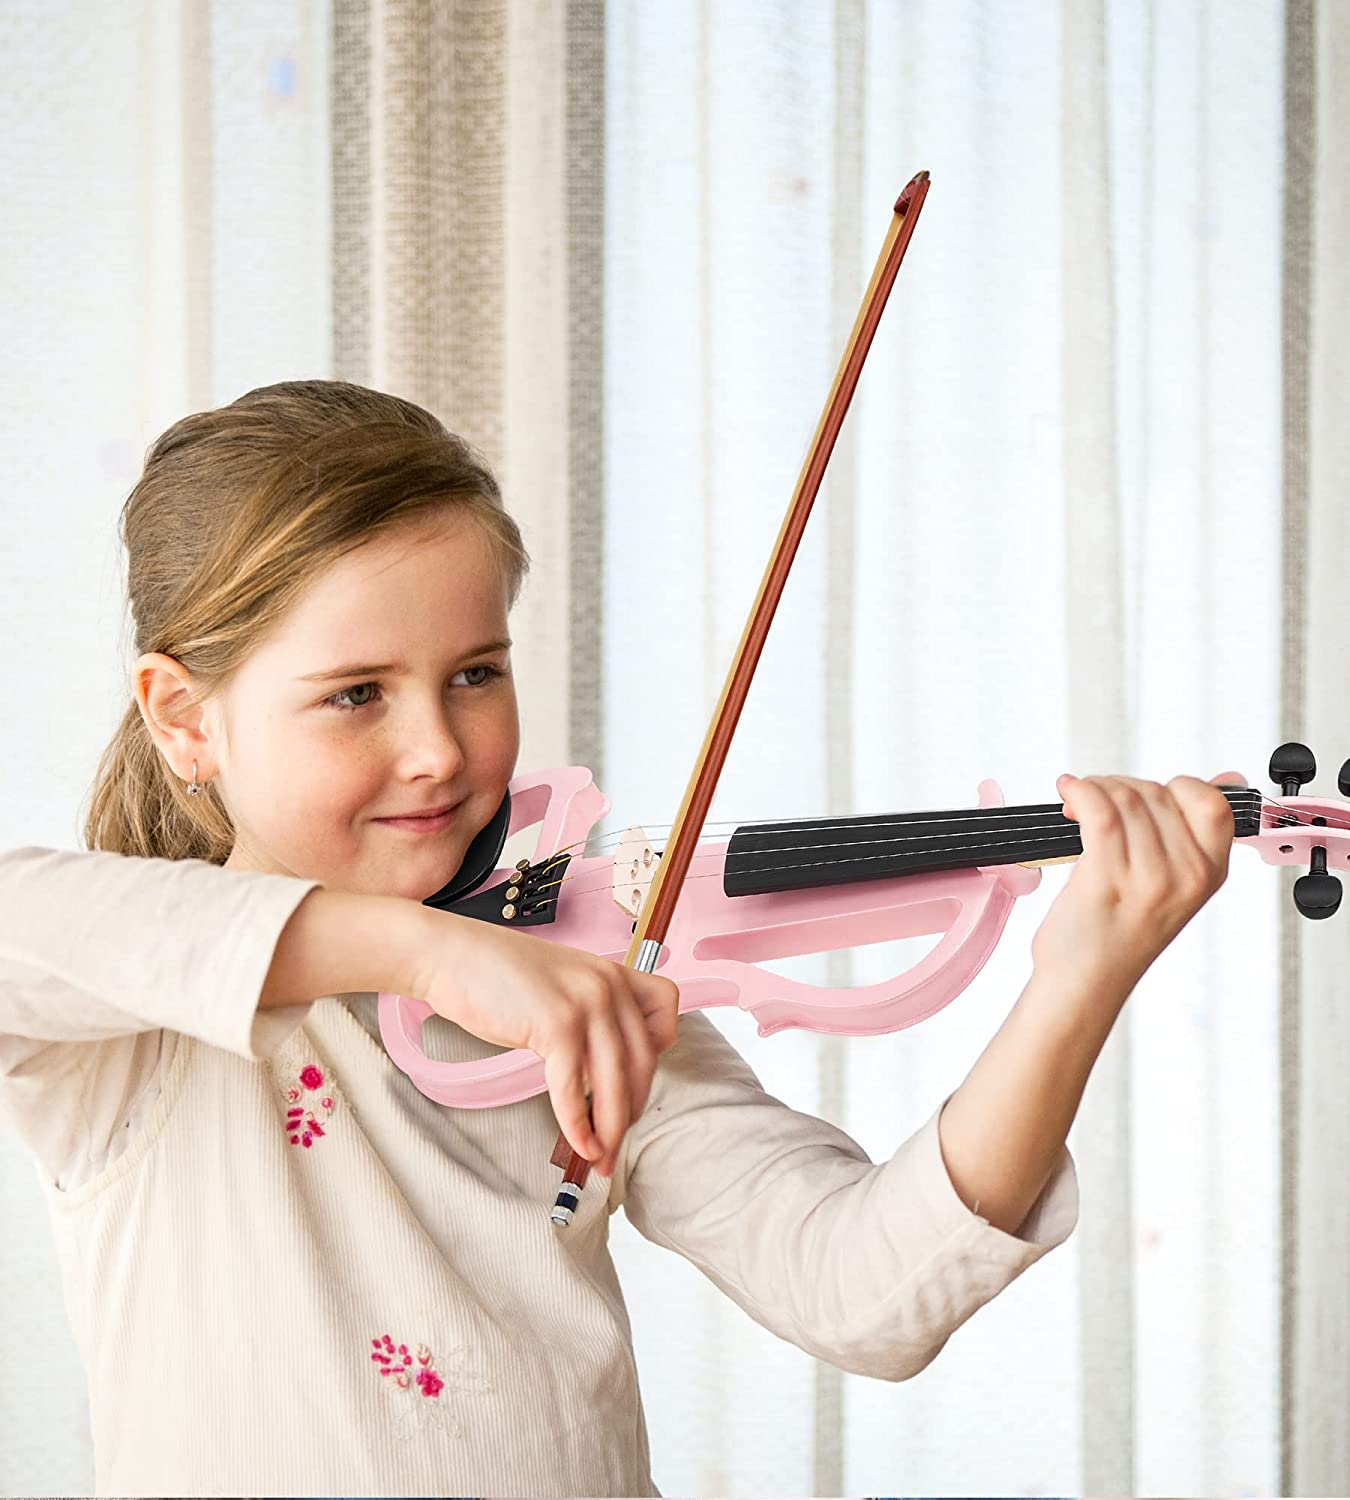 available on Amazon]Vangoa Kids Violin 1/2 Silent Violin Kit